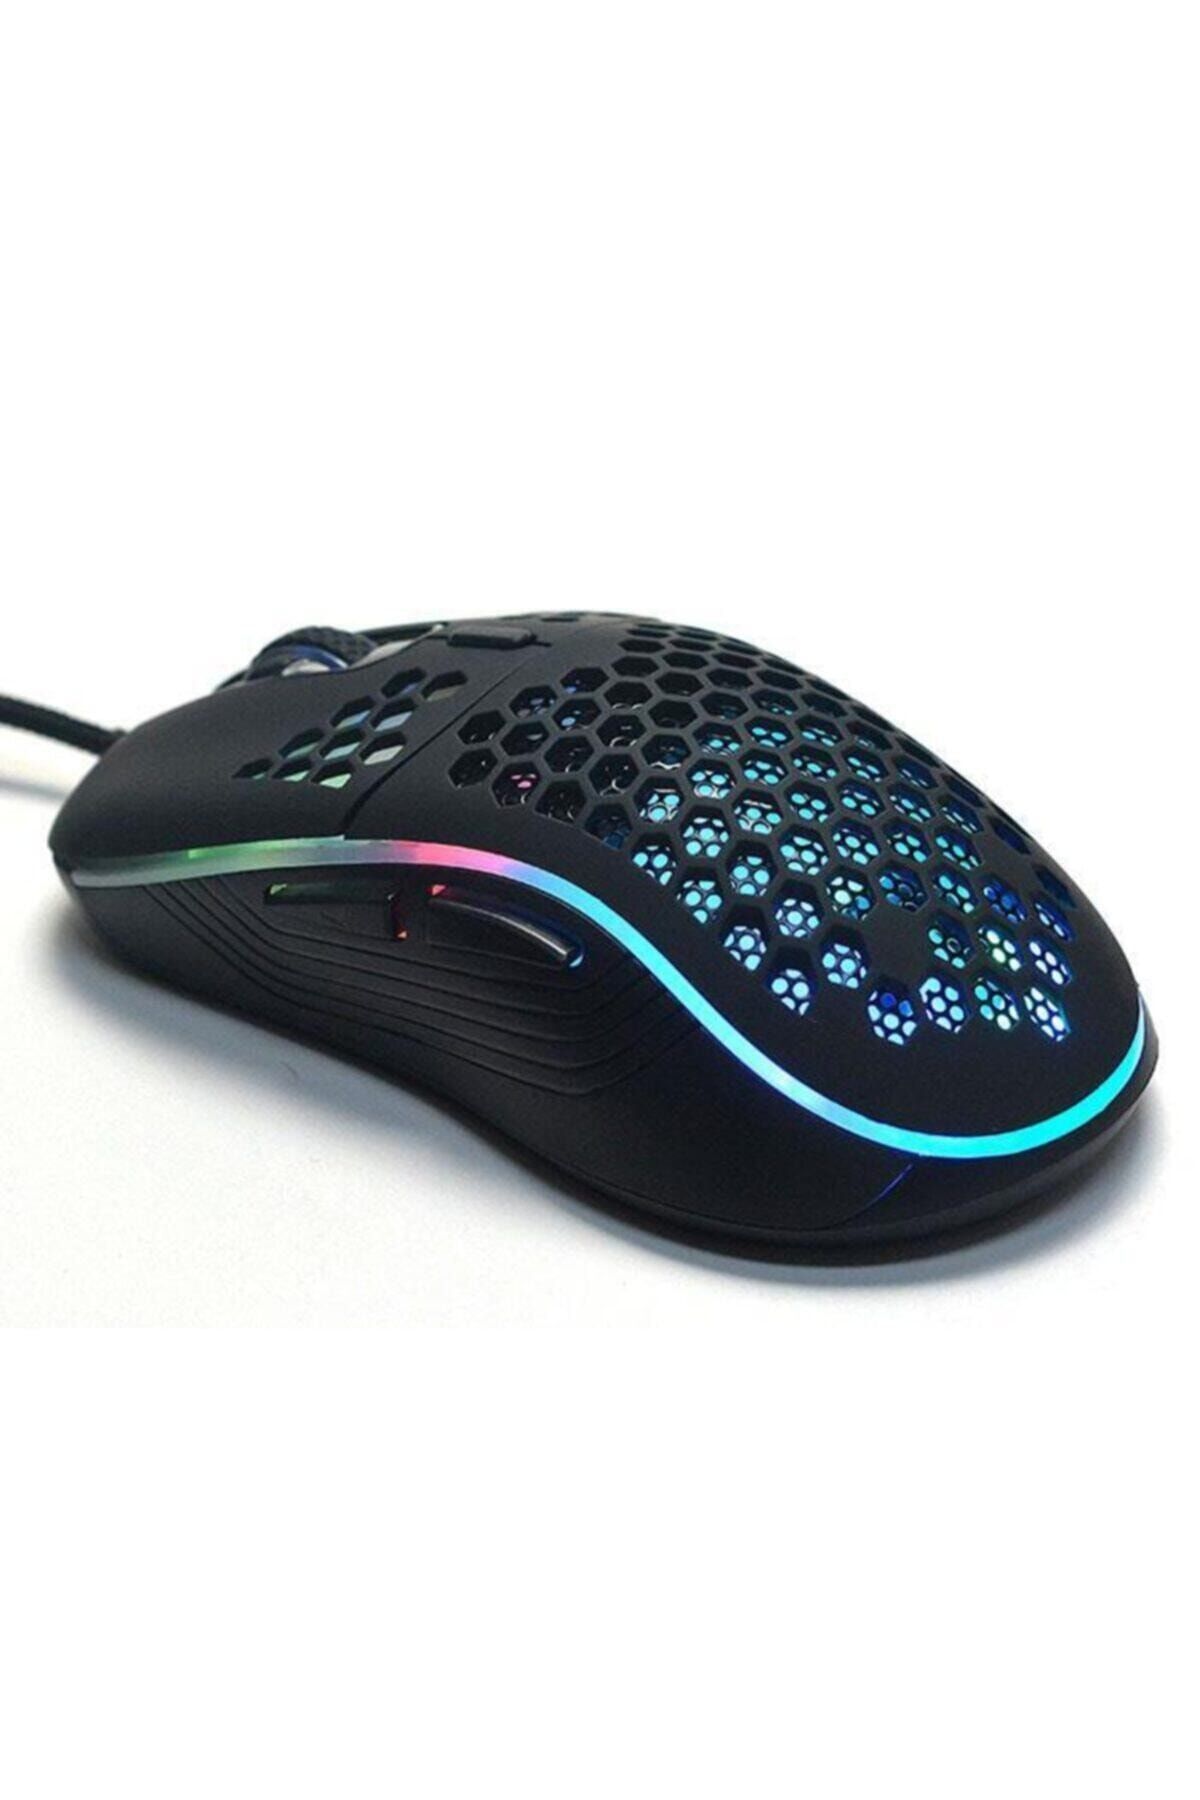 Hytech Hy-x6 Story Siyah Gaming Oyuncu Mouse 7200 Dpı Gökkuşağı Renkli